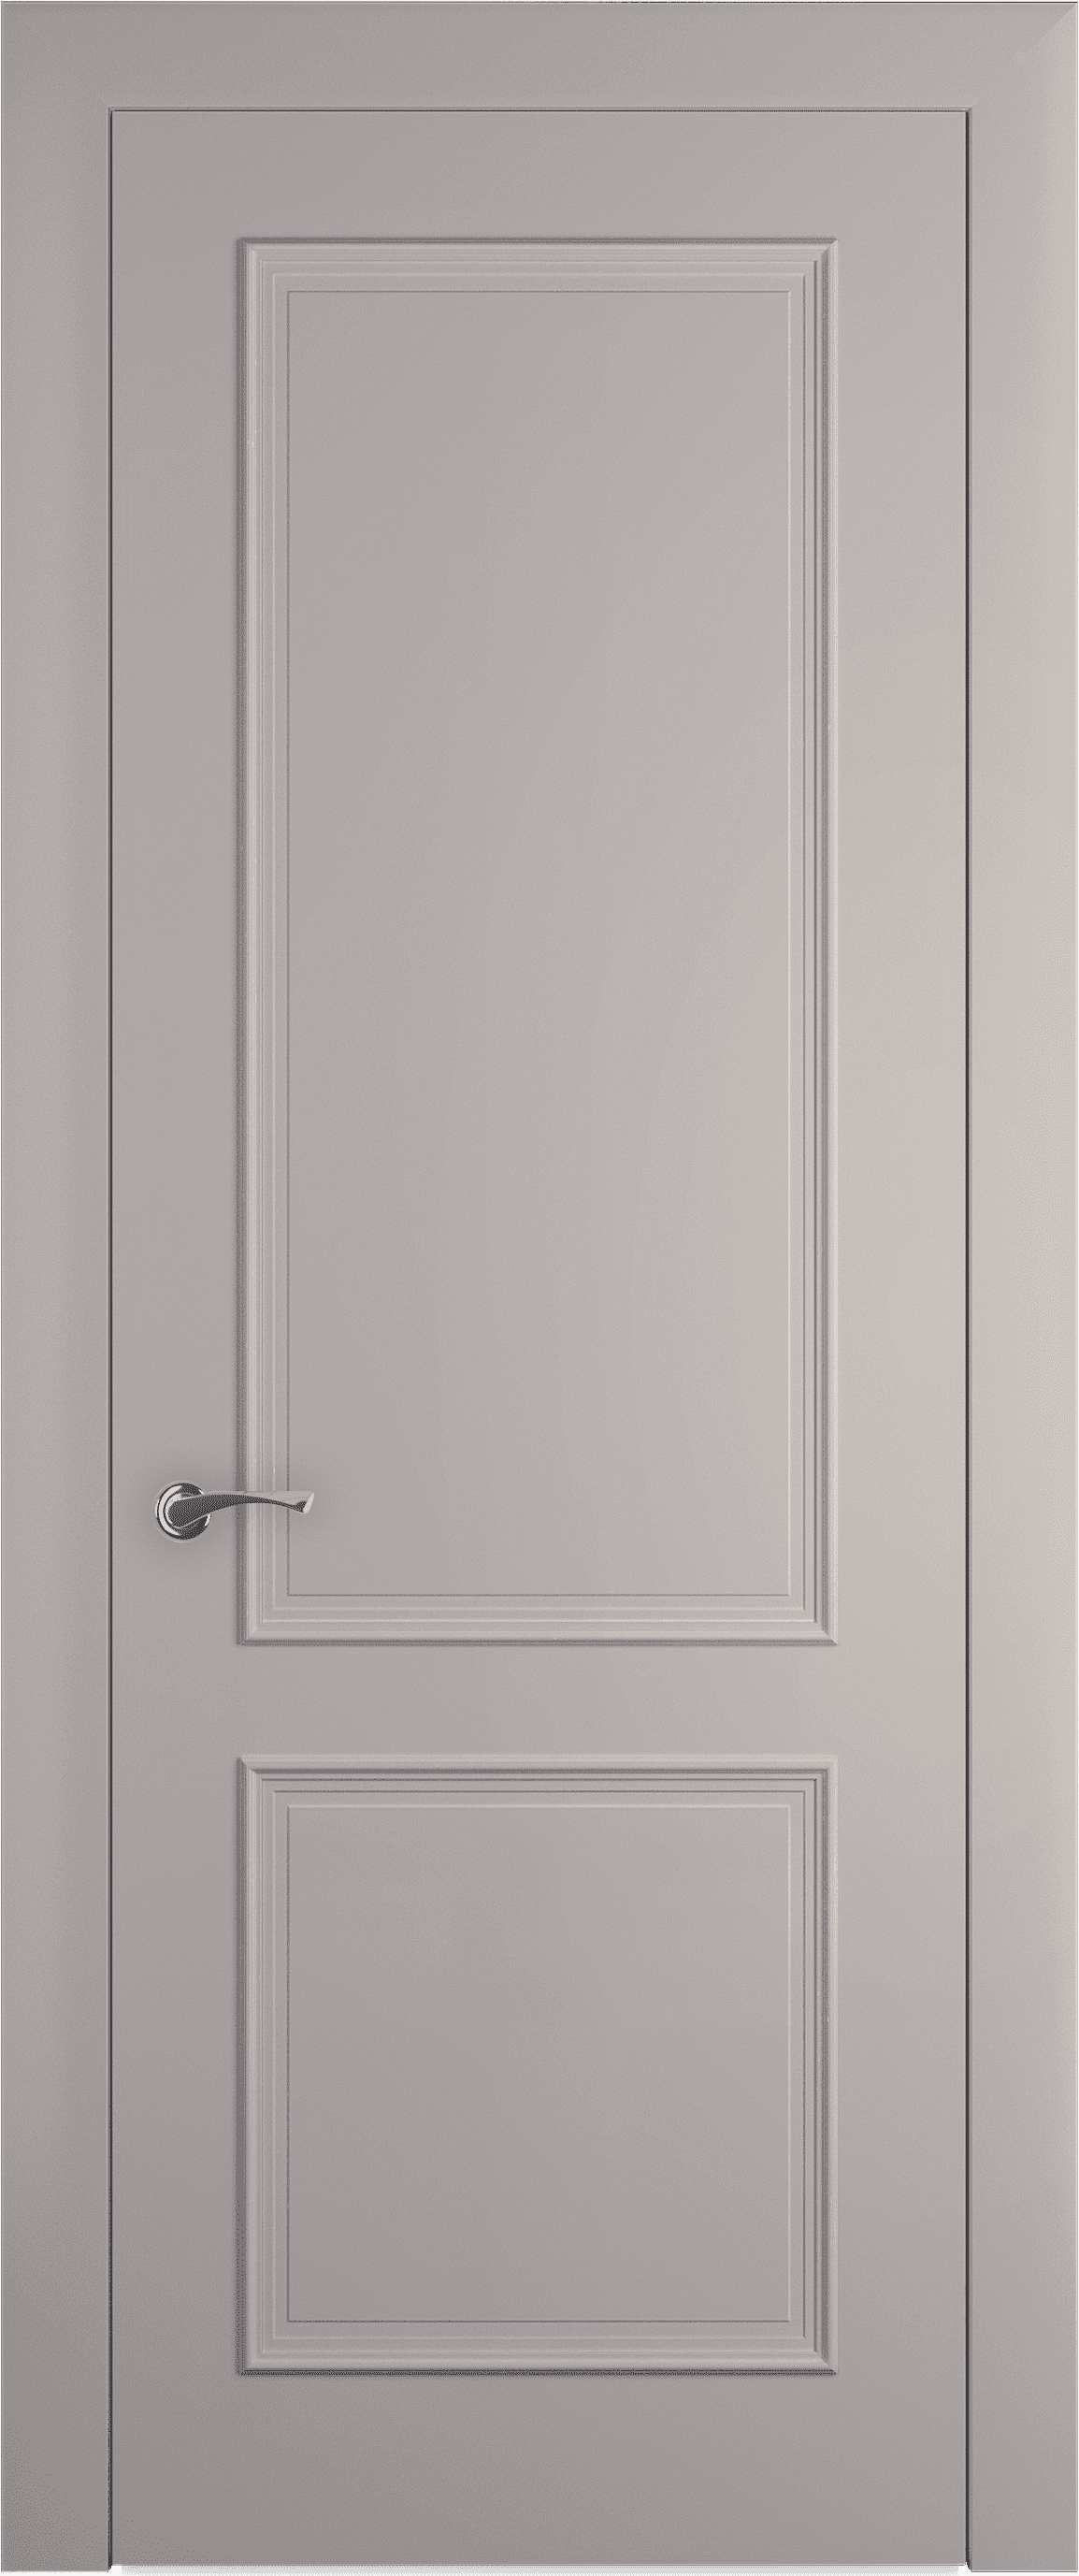 Межкомнатная дверь Классика багет 9